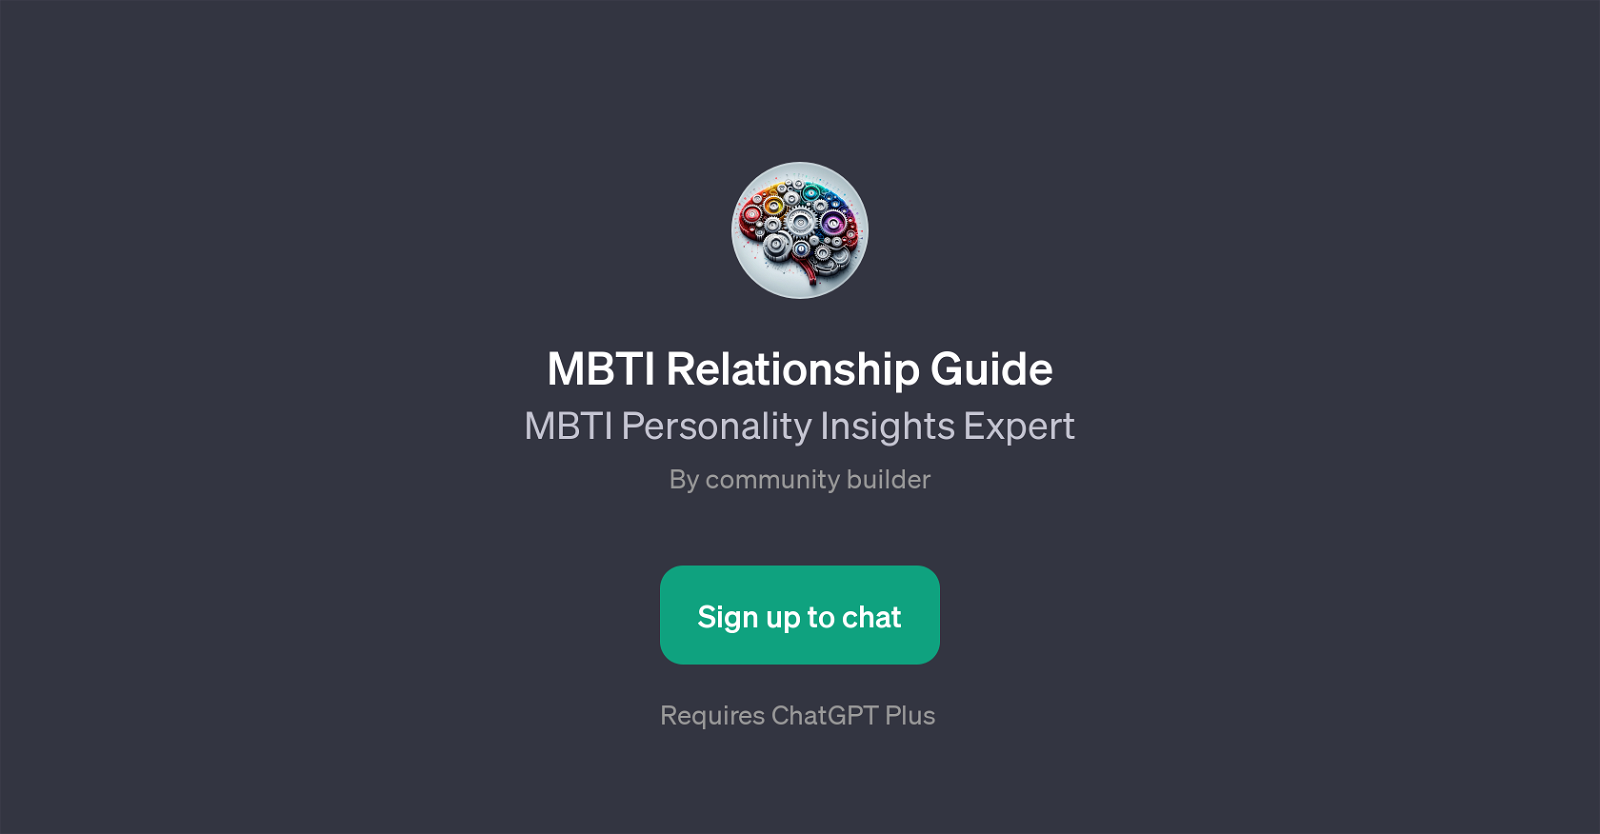 MBTI Relationship Guide website